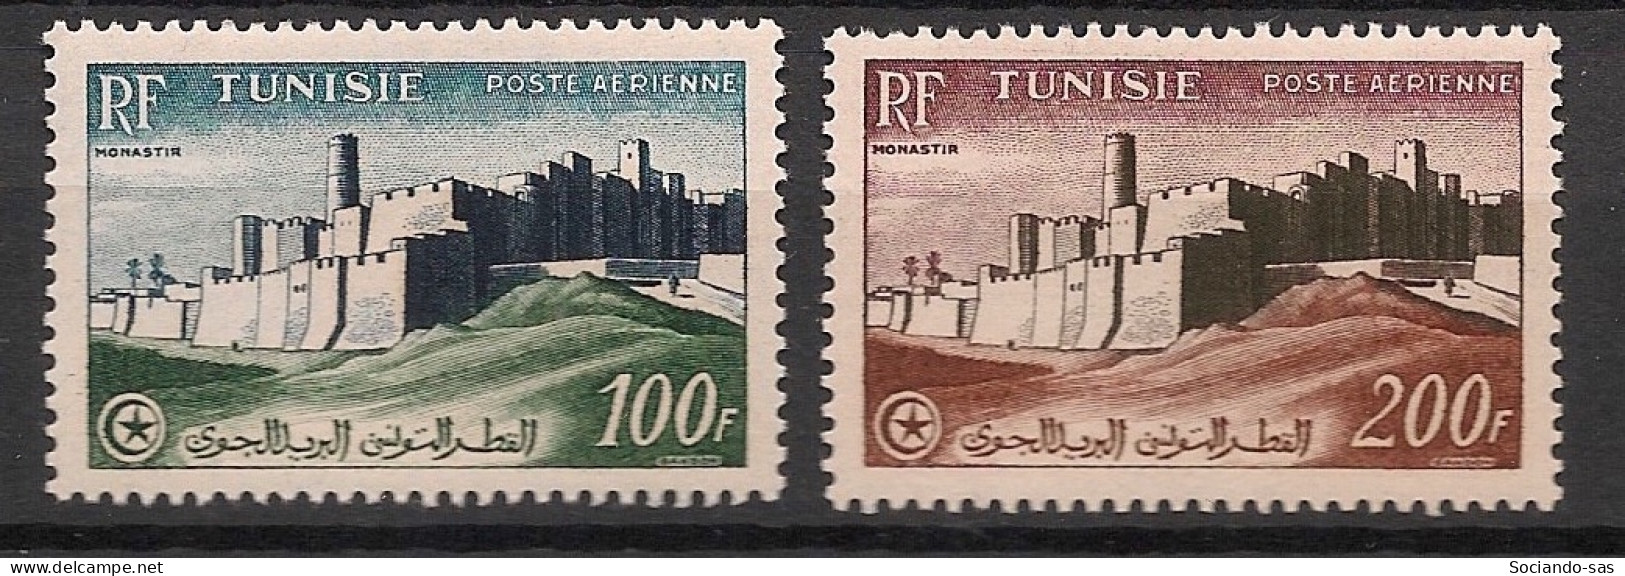 TUNISIE - 1954 - Poste Aérienne PA N°YT. 20 à 21 - Série Complète - Neuf* / MH VF - Posta Aerea